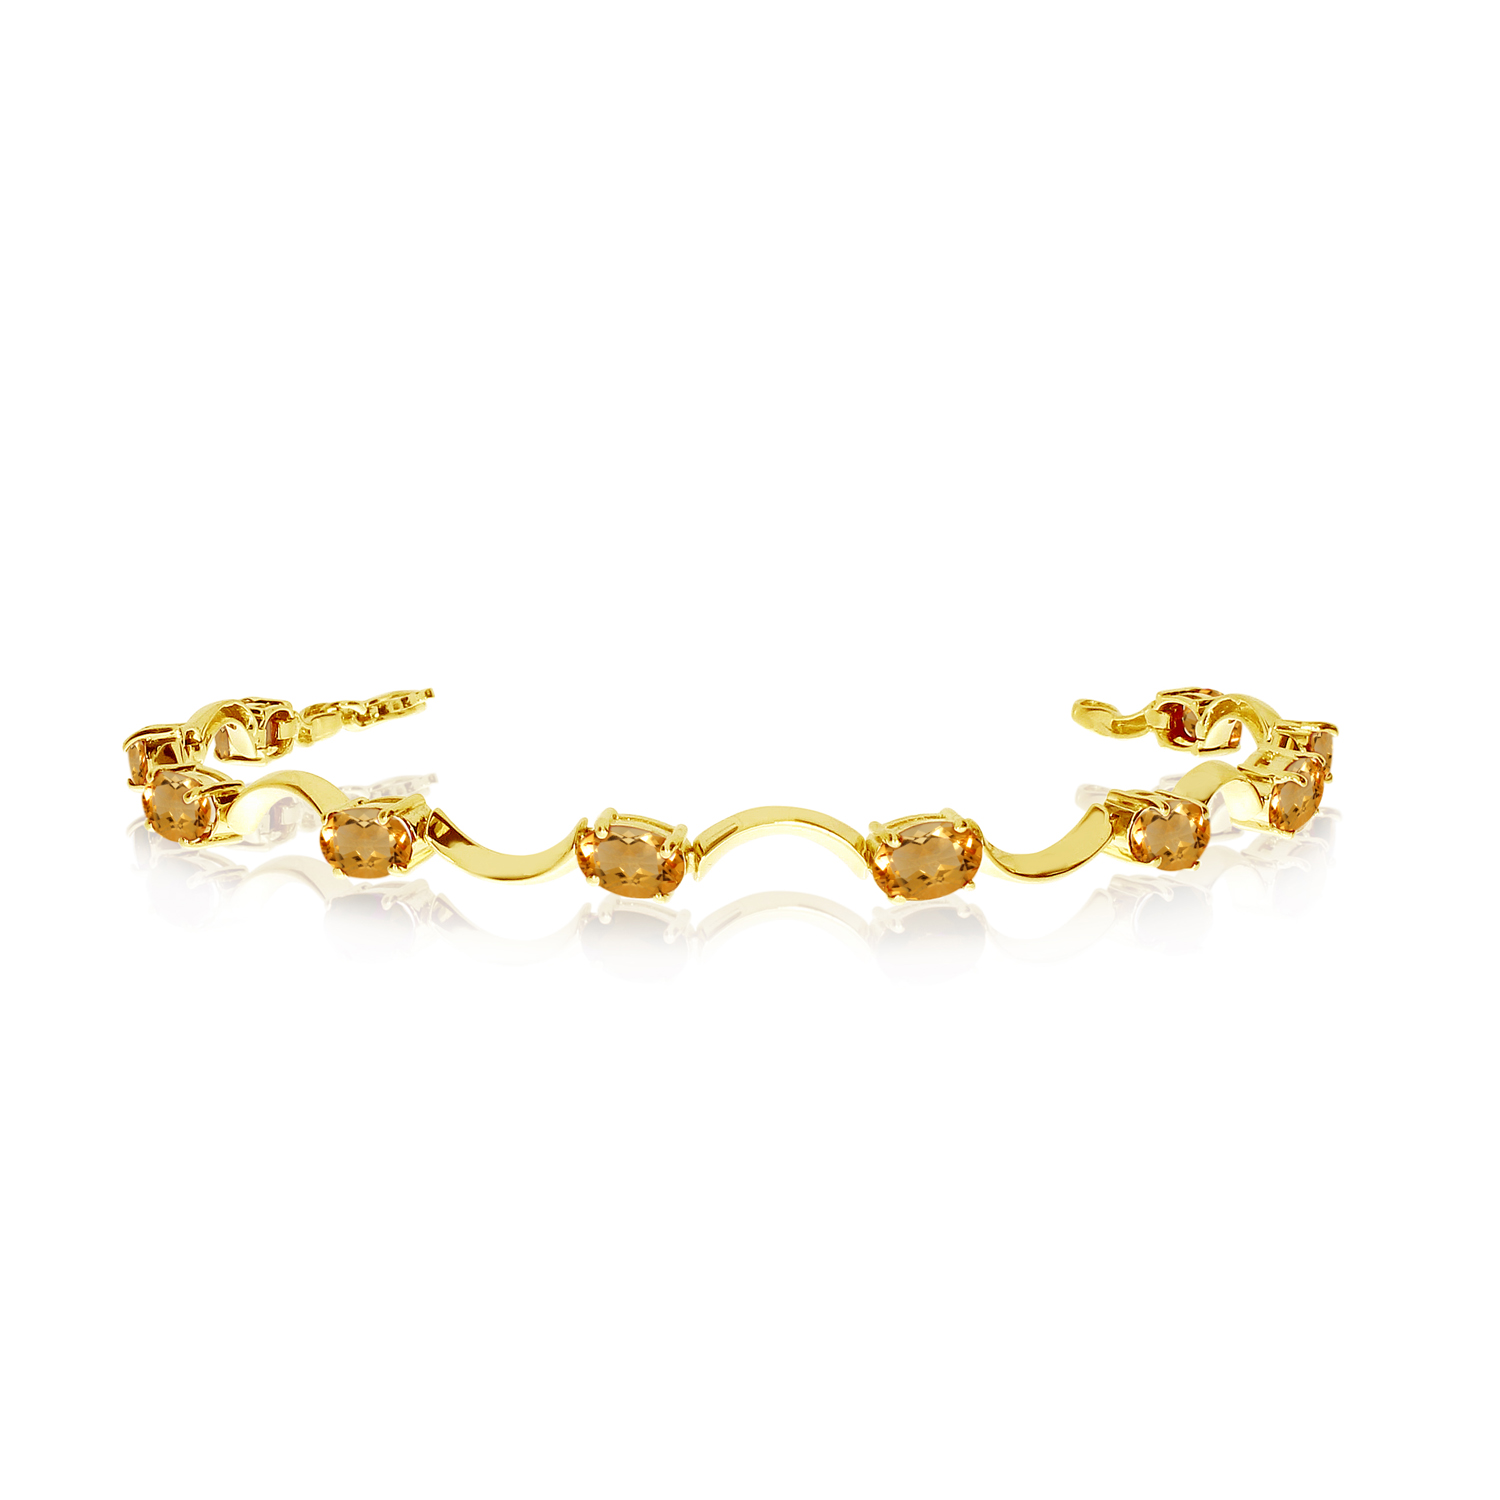 10K Yellow Gold Oval Citrine Curved Bar Bracelet - image 1 of 3